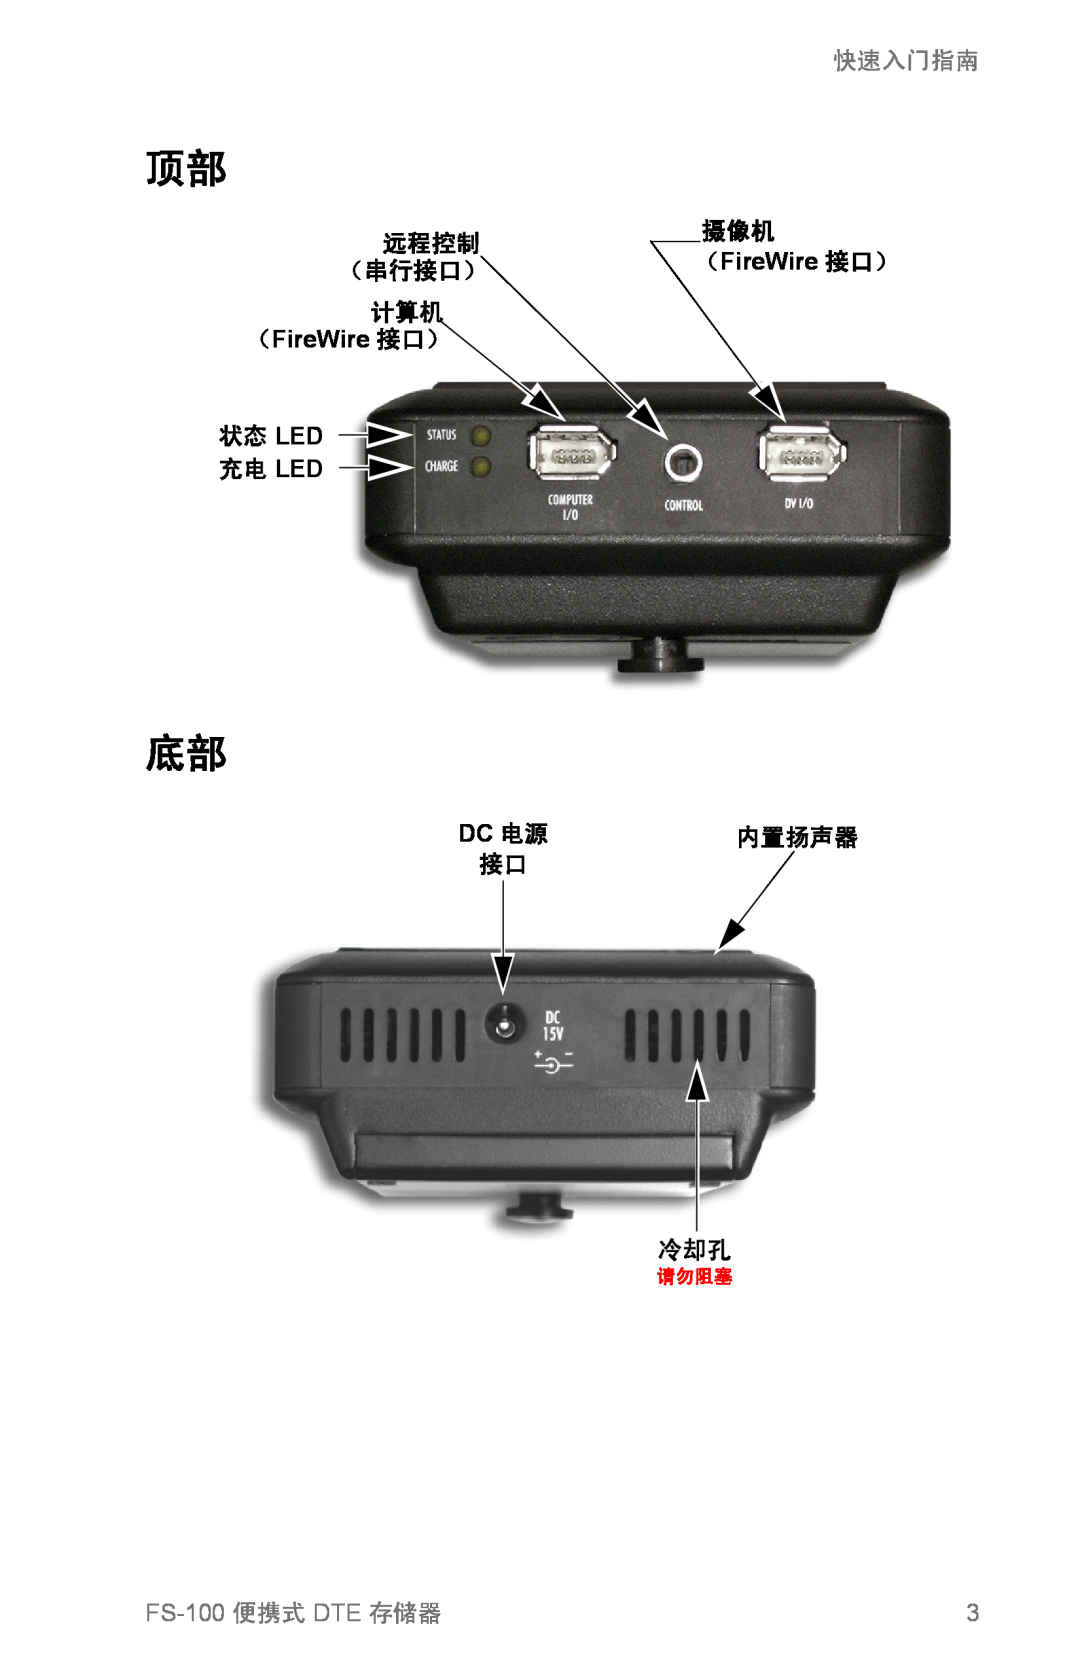 FOCUS Enhancements DVCPRO25 远程控制, （串行接口）, 计算机 （FireWire 接口） 状态 LED 充电 LED, 快速入门指南, FS-100 便携式 DTE 存储器, Dc 电源, 内置扬声器, 请勿阻塞 